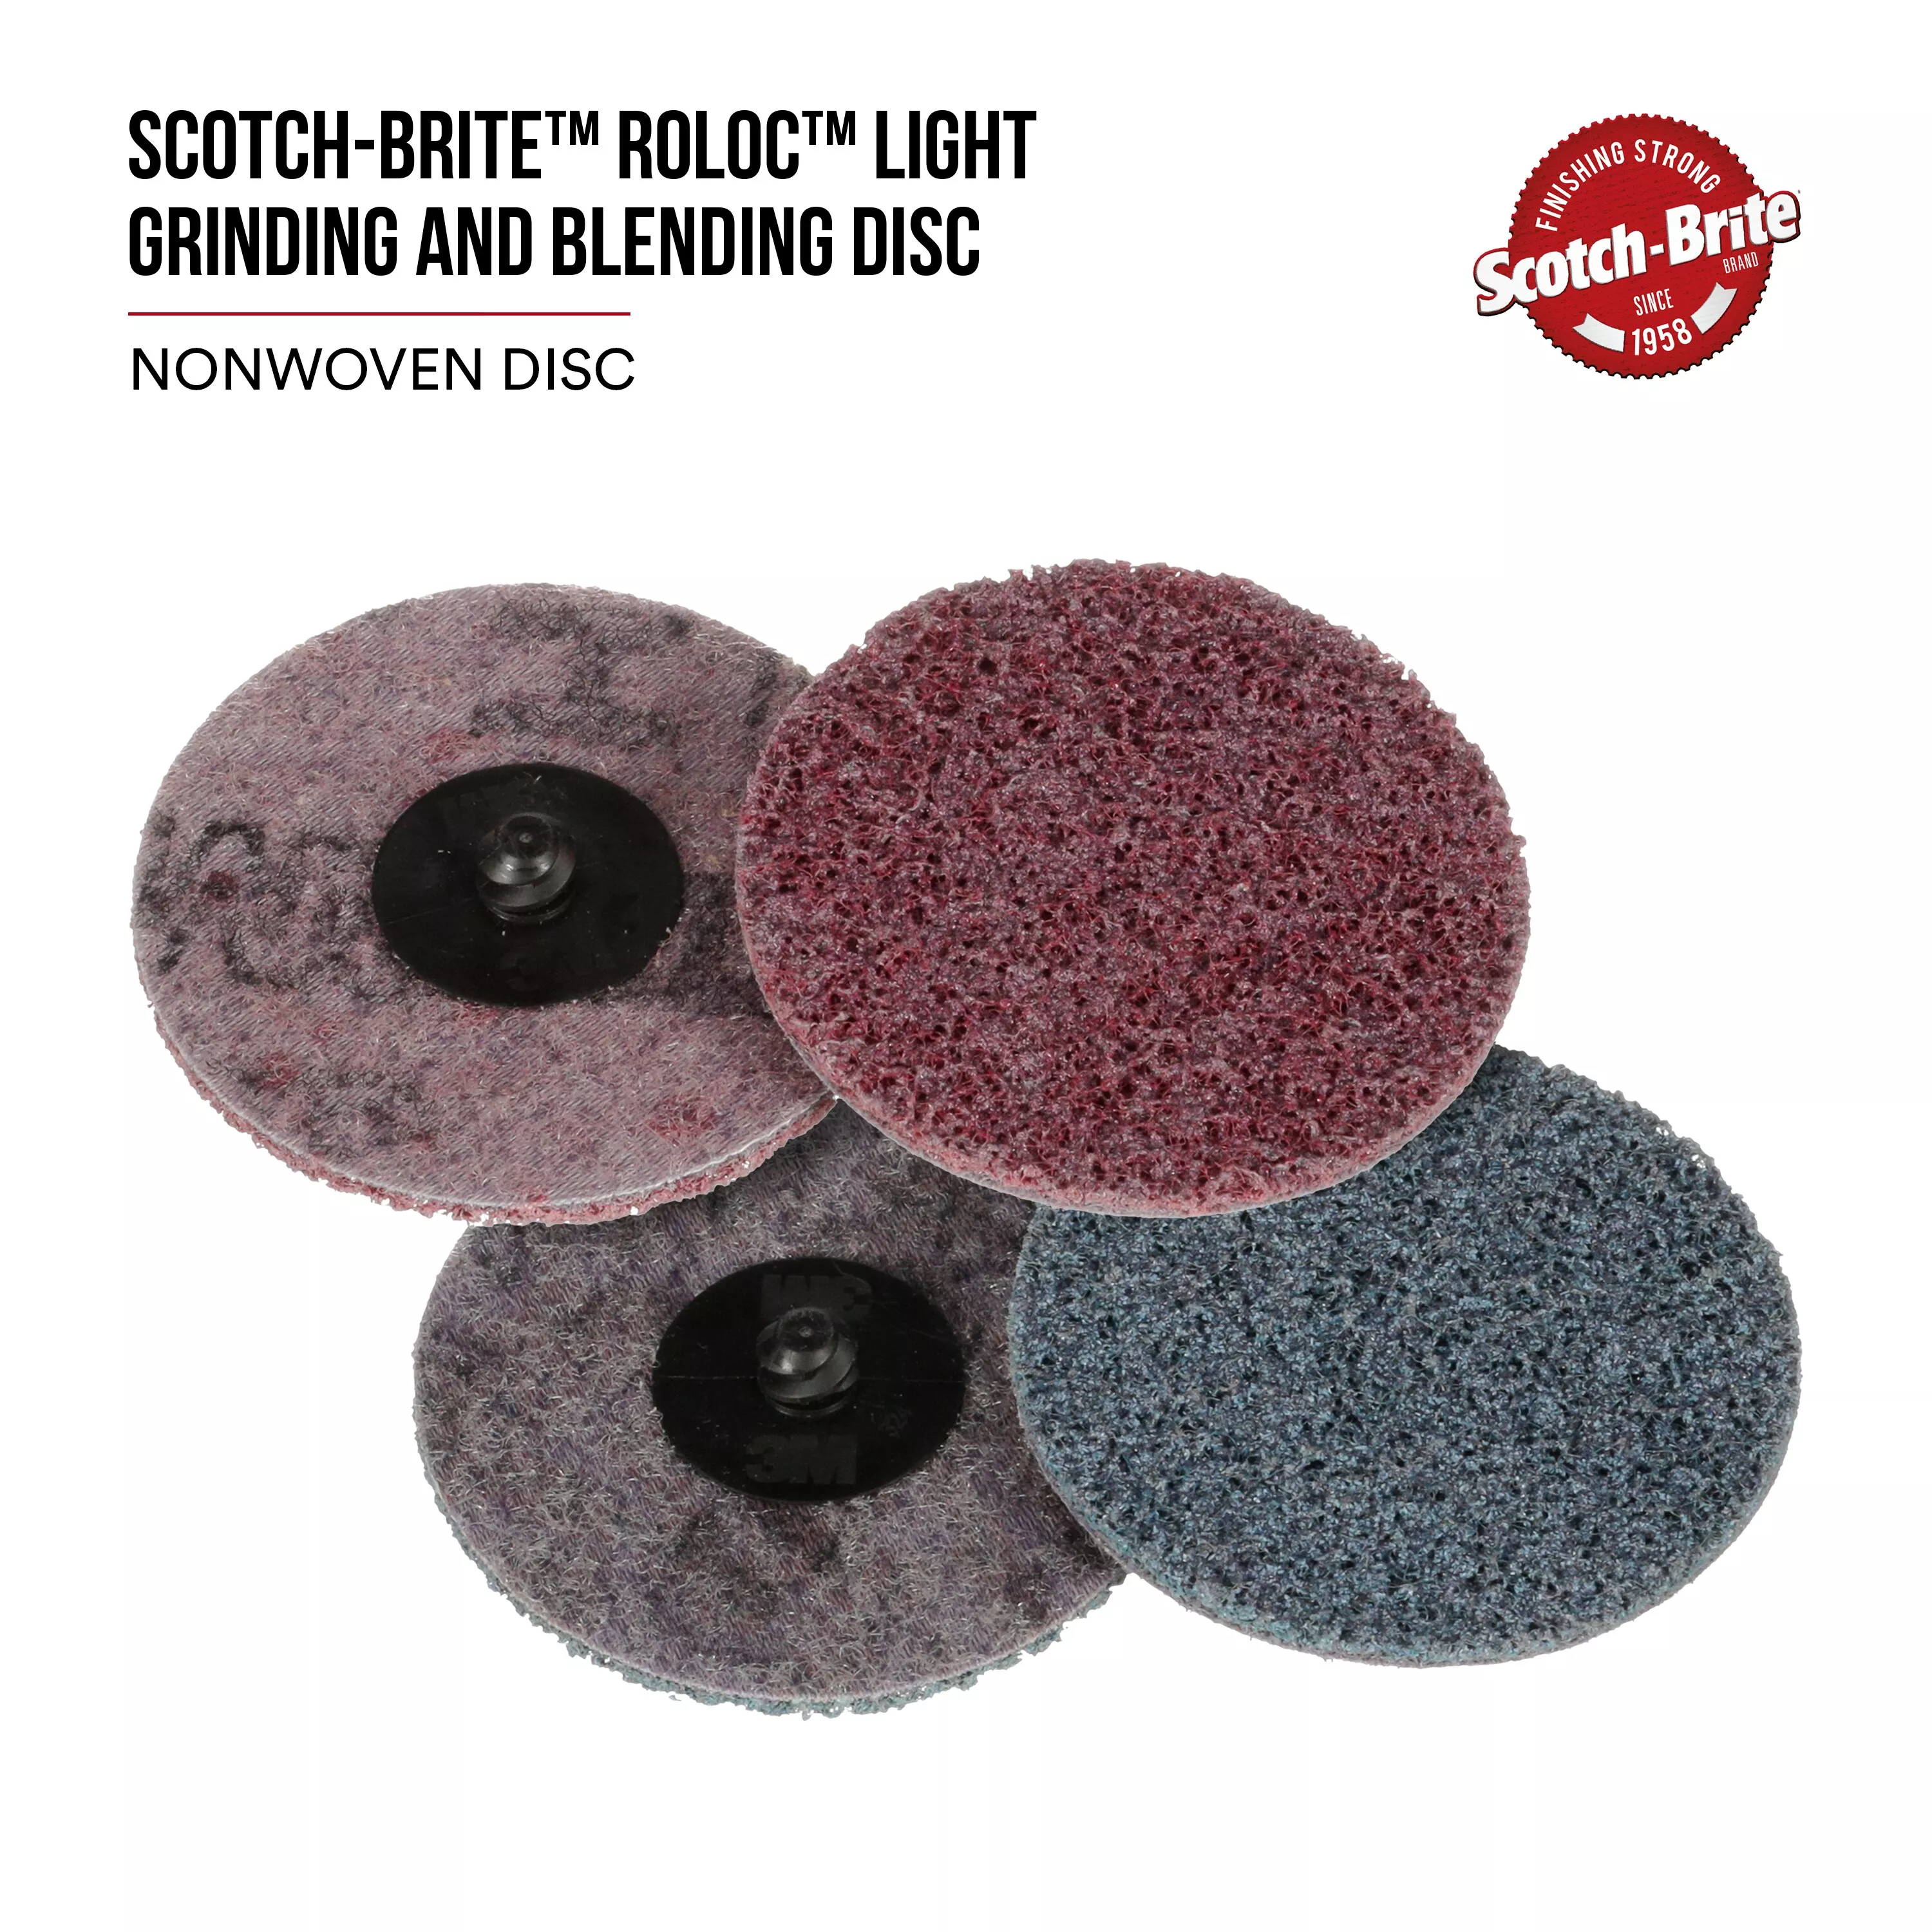 SKU 7100048019 | Scotch-Brite™ Roloc™ Light Grinding and Blending Disc